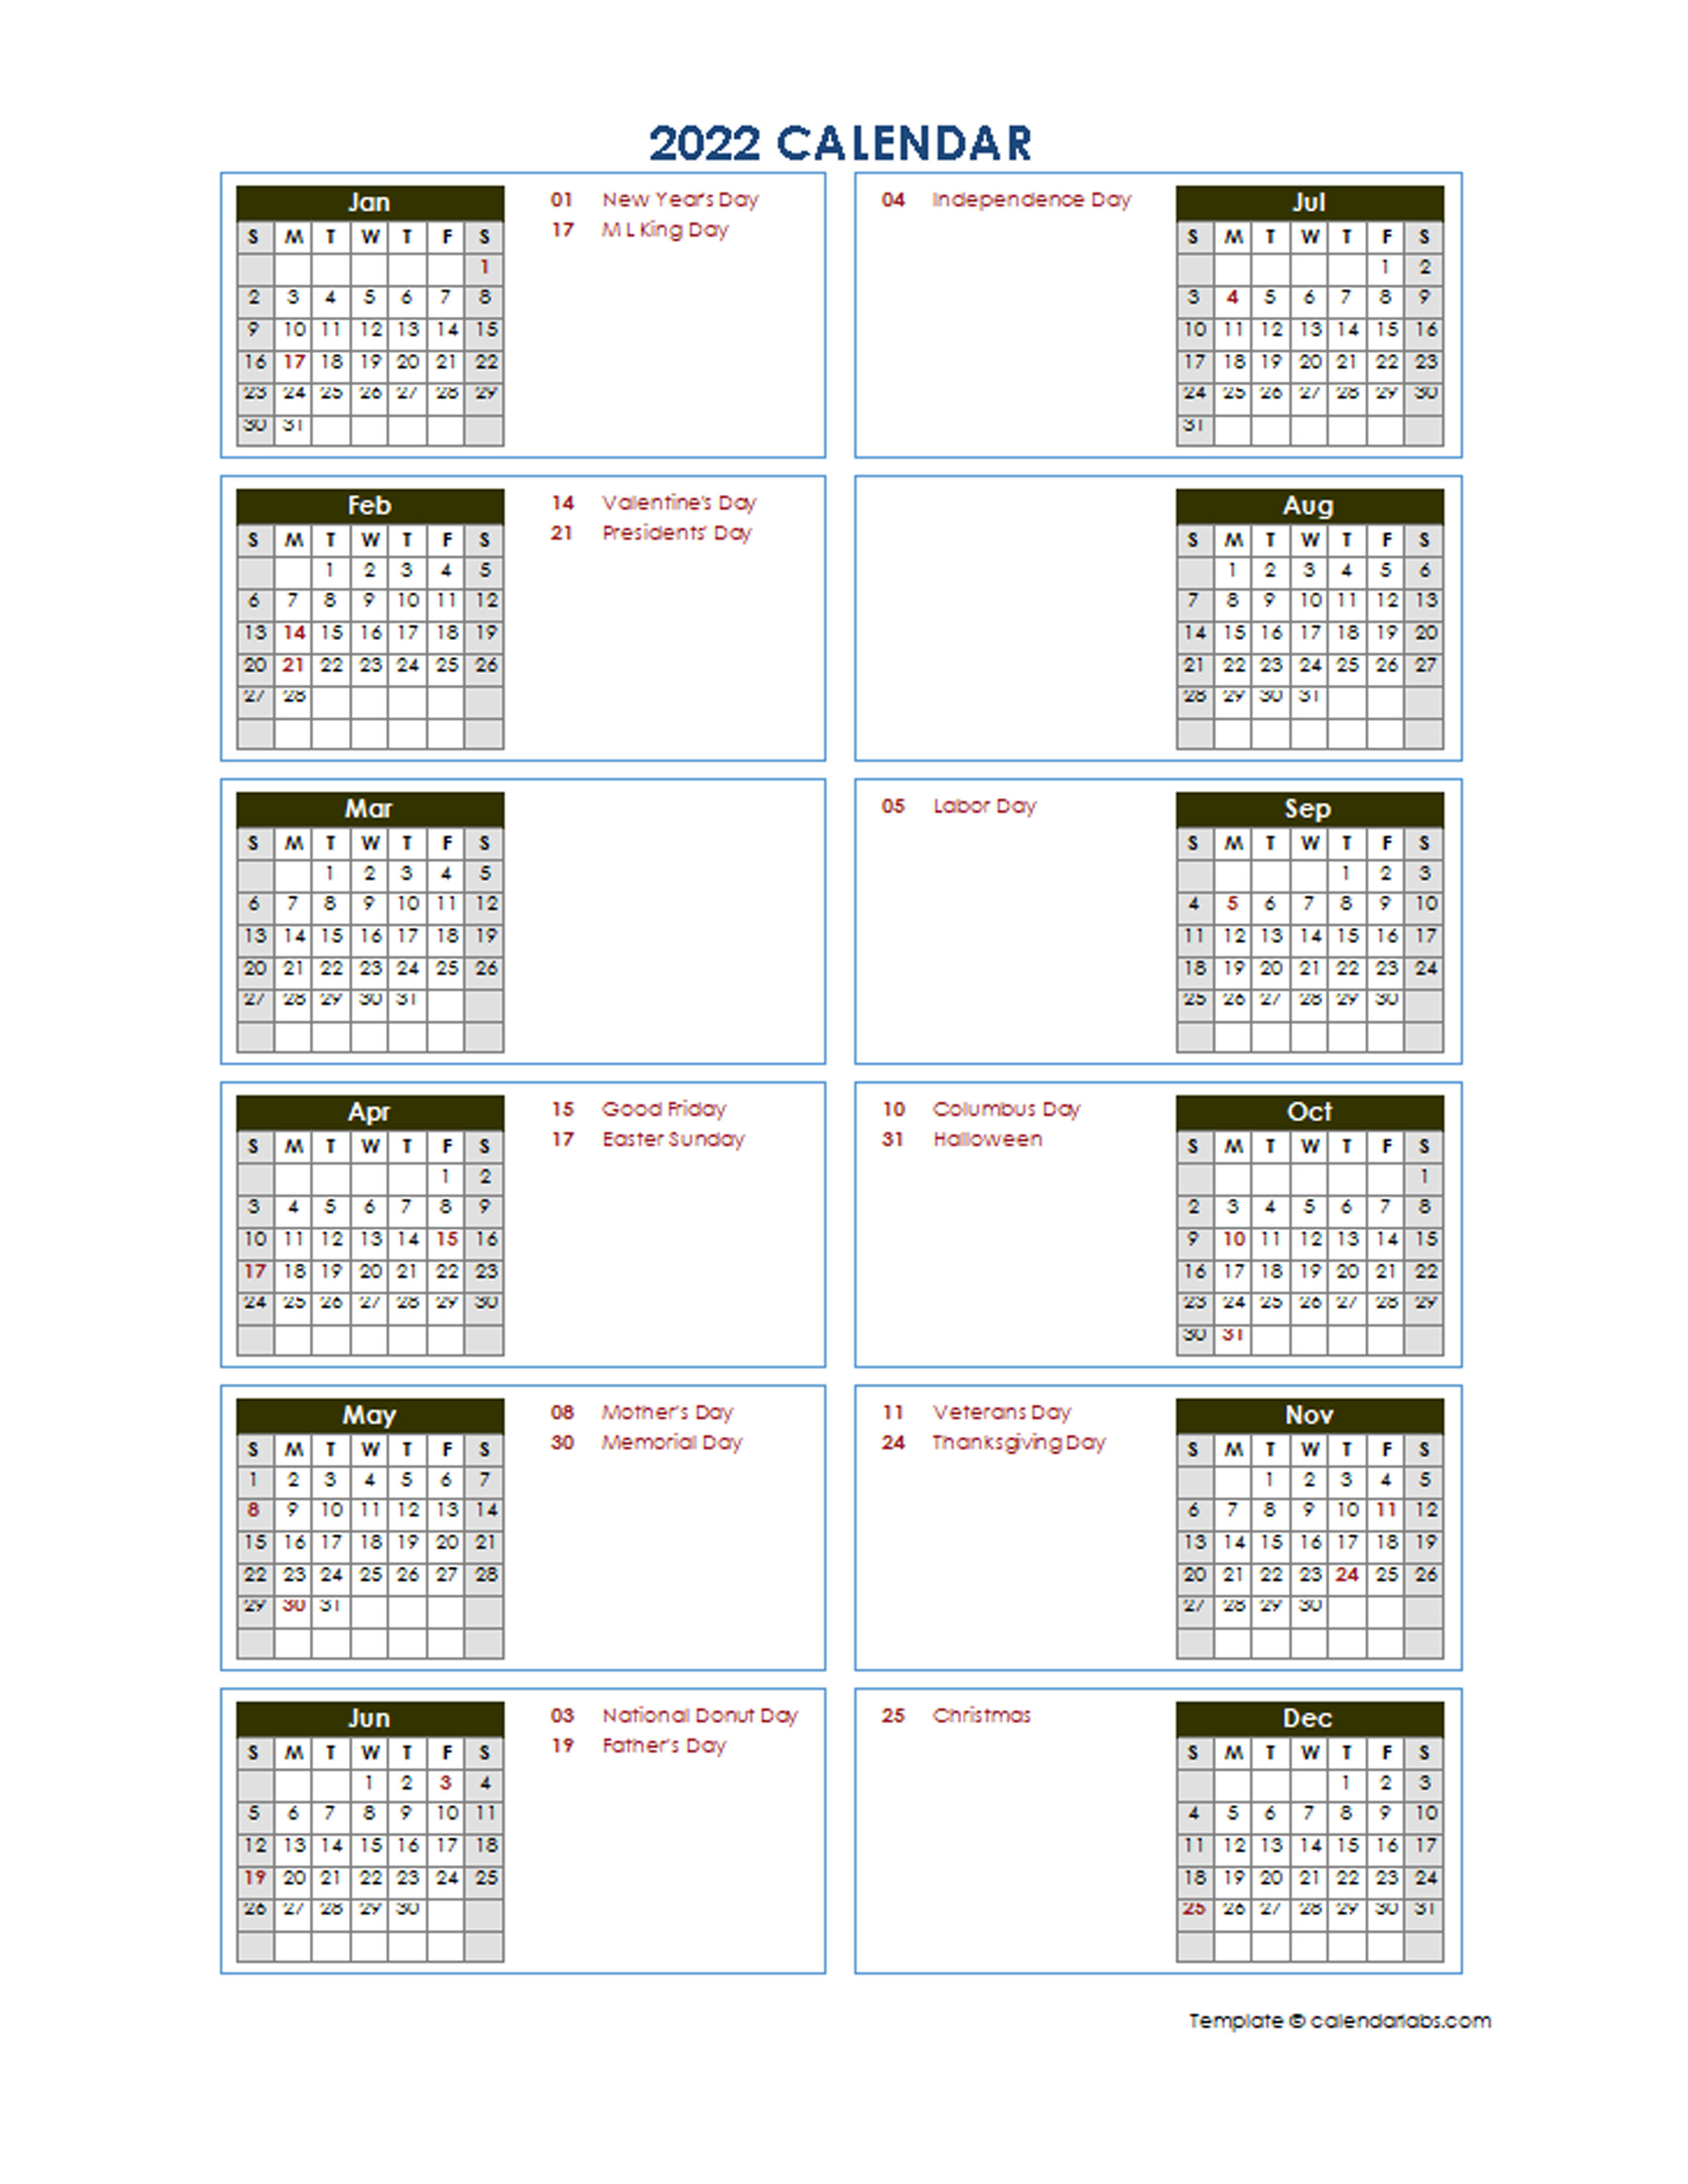 2022 calendar template indesign